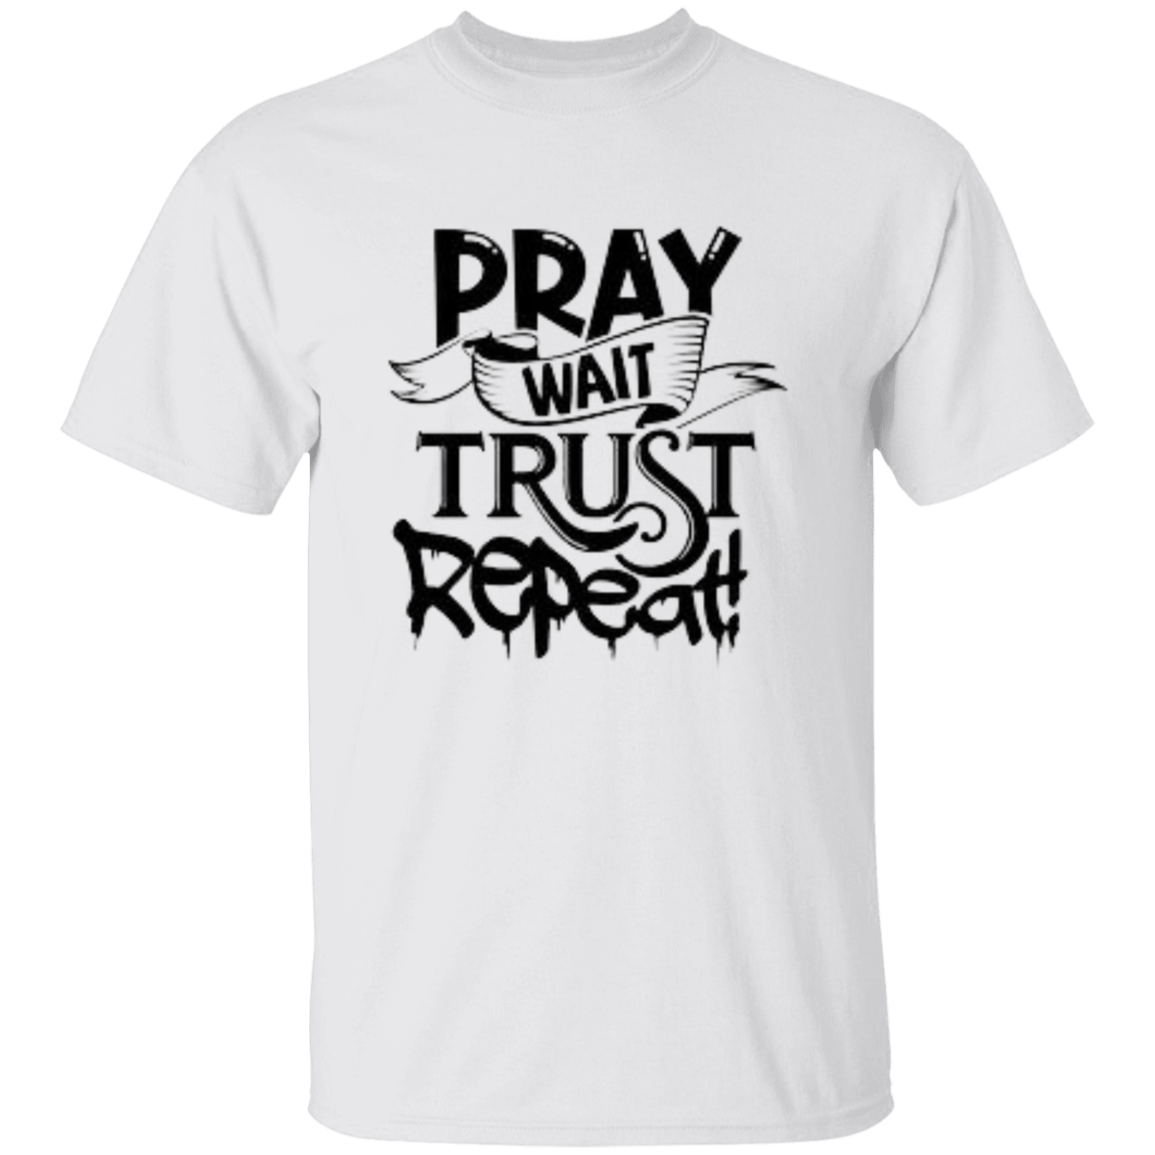 Pray Wait Trust Repeat 5.3 oz. T-Shirt For Women, ,Shirt for Woman, T Shirt for Women, Christian Shirts for Women, Jesus Shirt, Gift for Women, Gift for Her, Christian Clothing